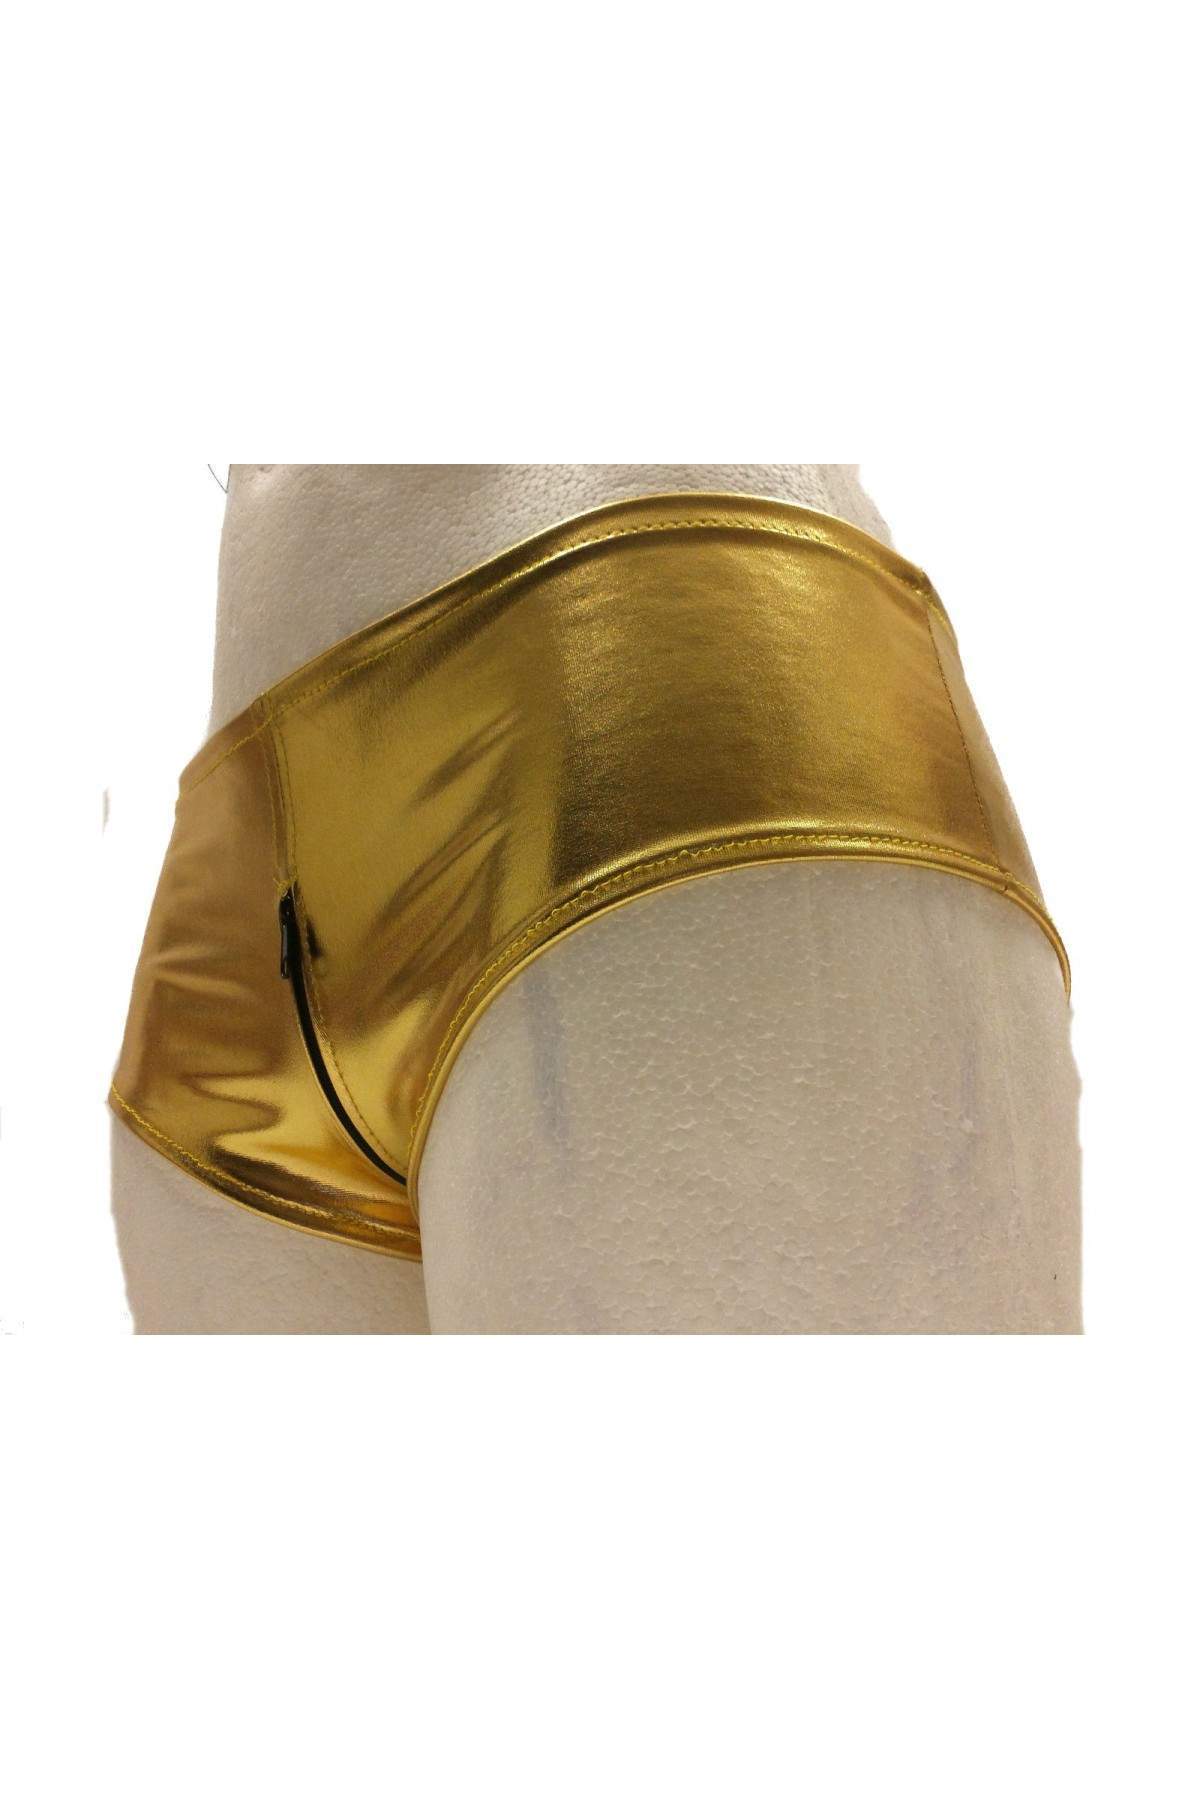 Leder-Optik Ouvert Hotpants Gold mit Reißverschluss Größen 32 - 52 - 